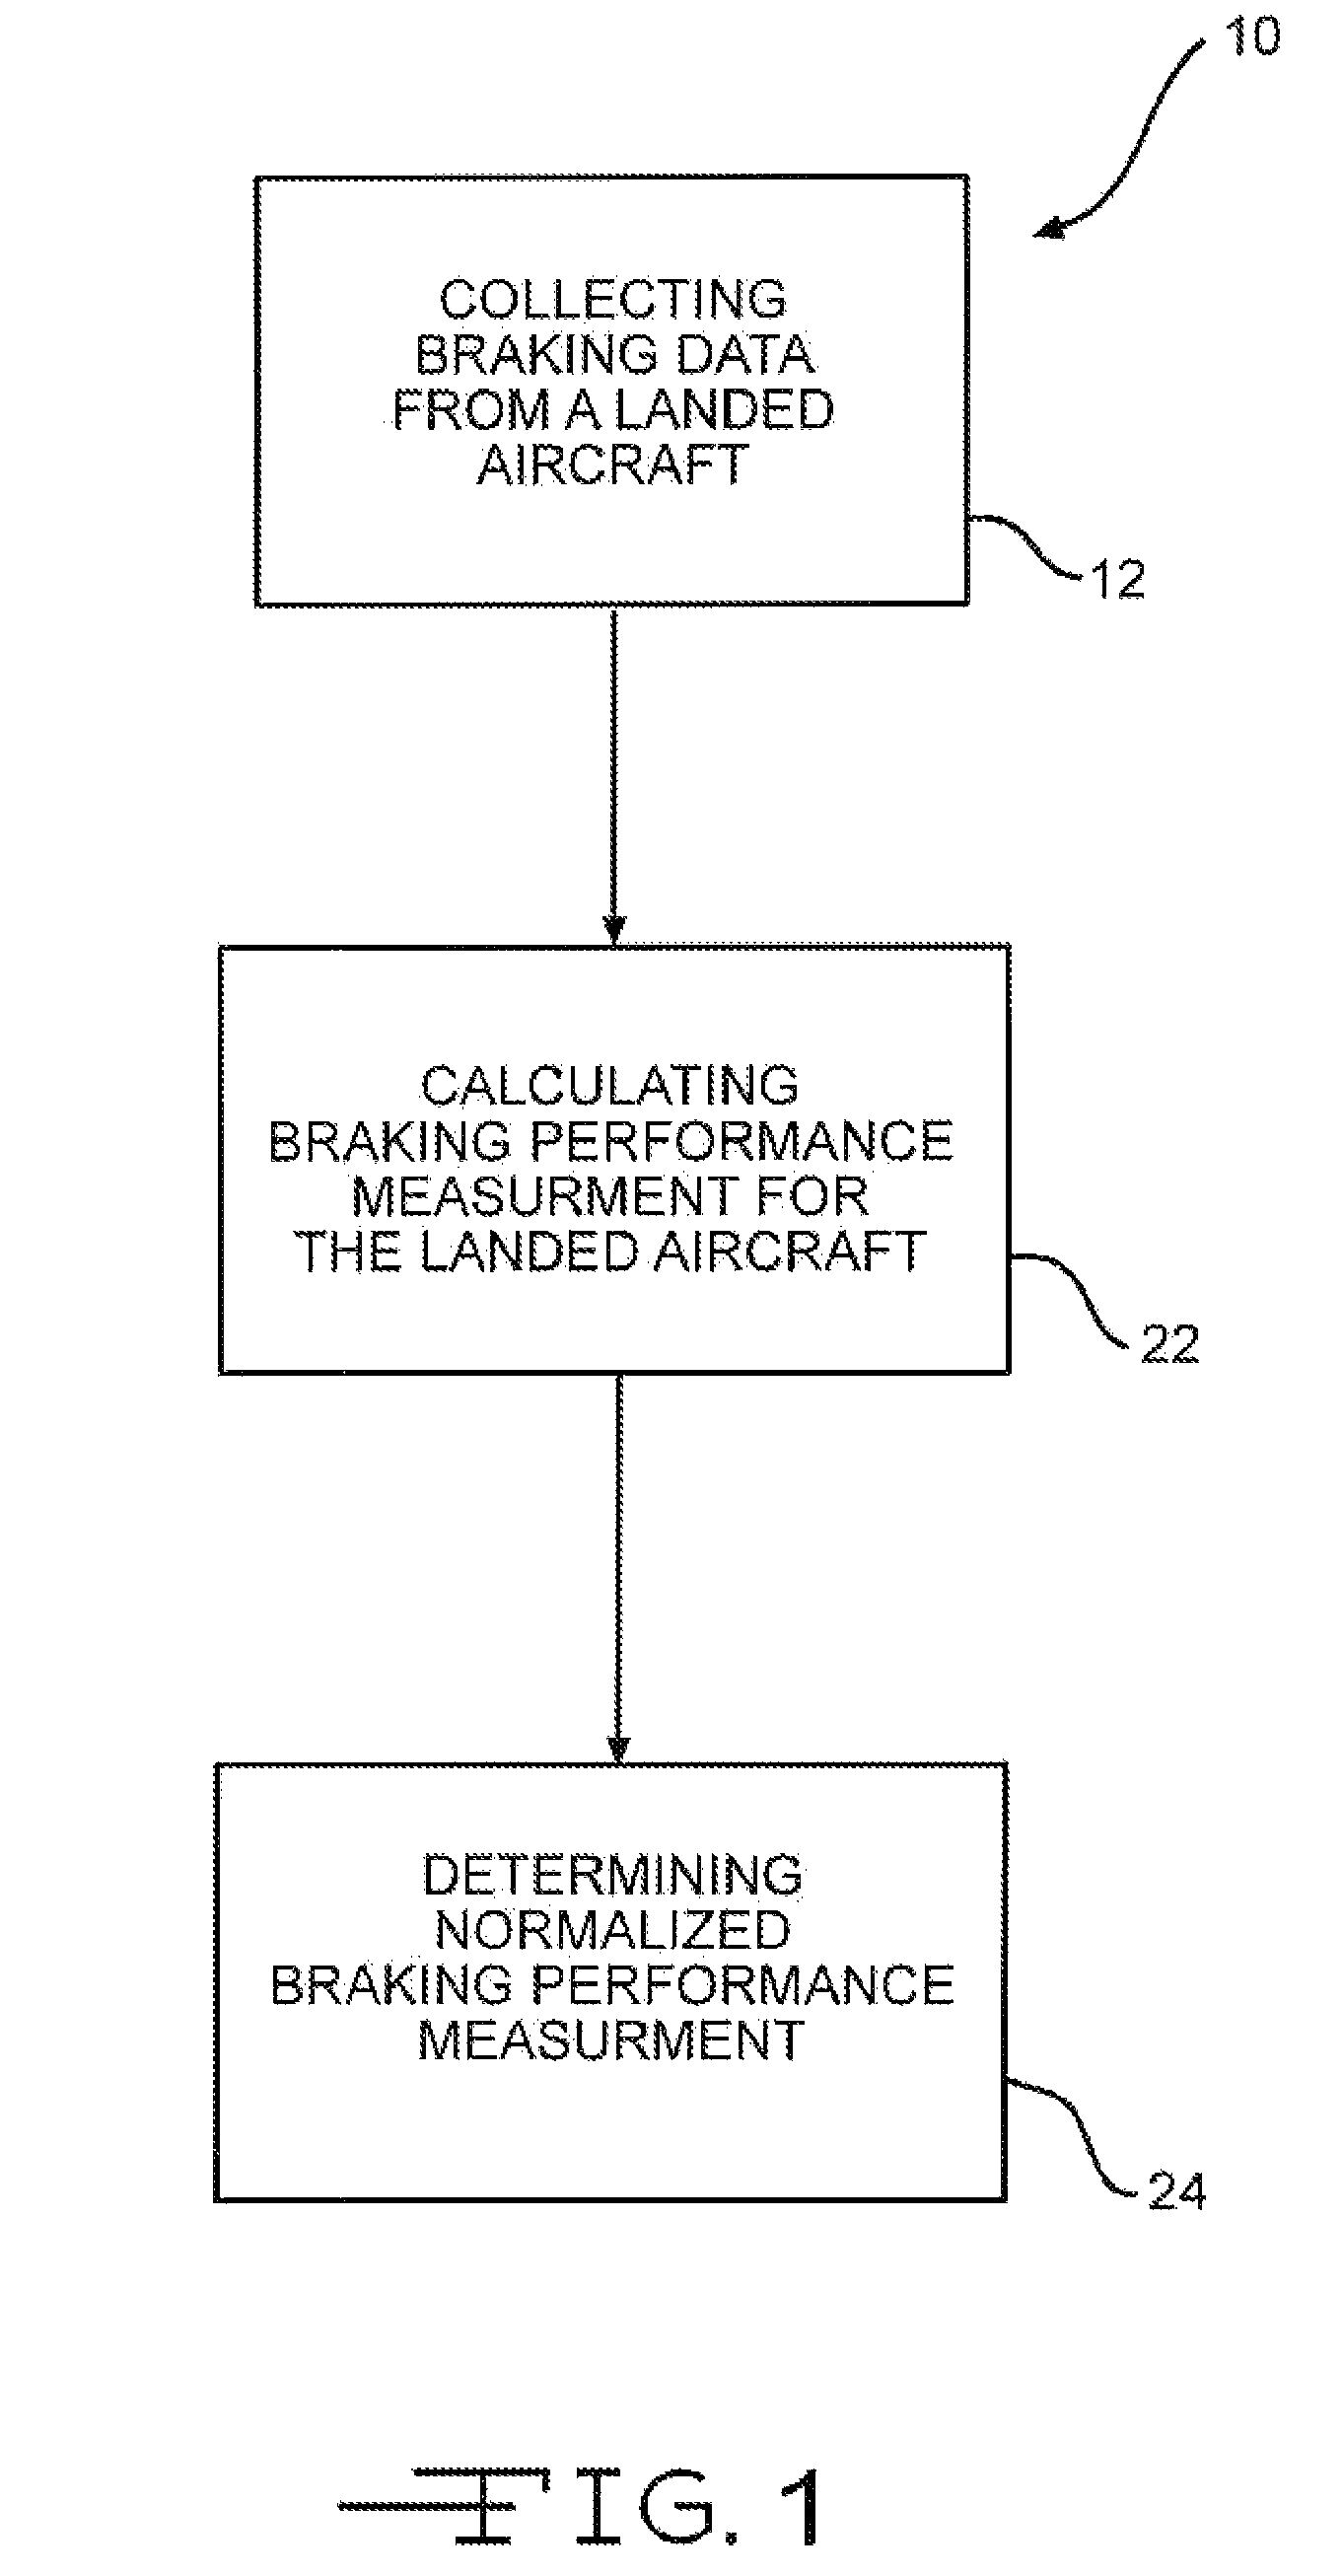 Determination of runway landing conditions